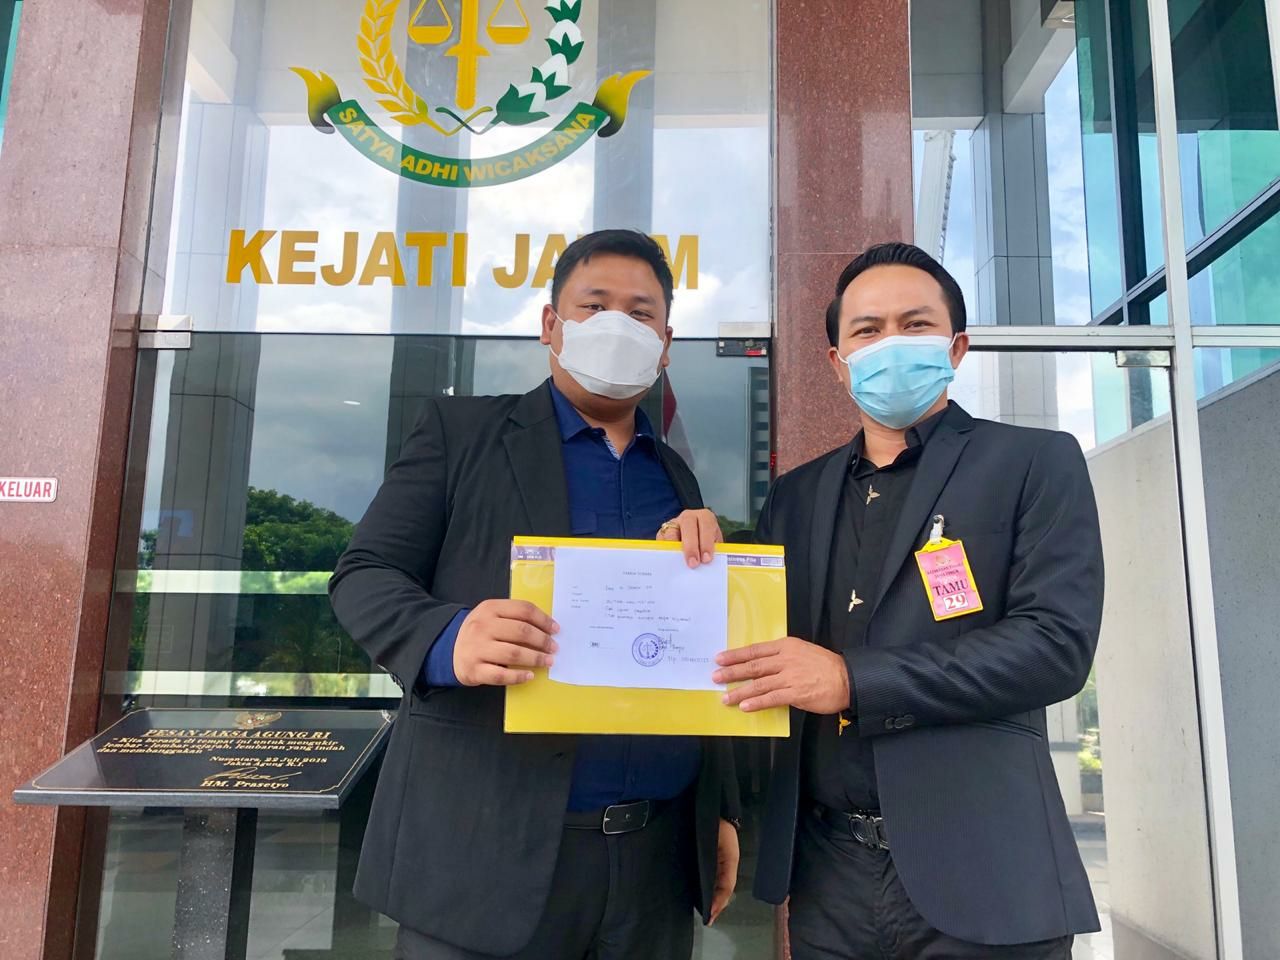 Kuasa Hukum Paslon MAJU menunjukkan tanda terima pelaporan Walikota Surabaya dan ASN Pemkot di Kejati Jatim, Surabaya, Kamis 3 Desember 2020. (Foto: Istimewa)